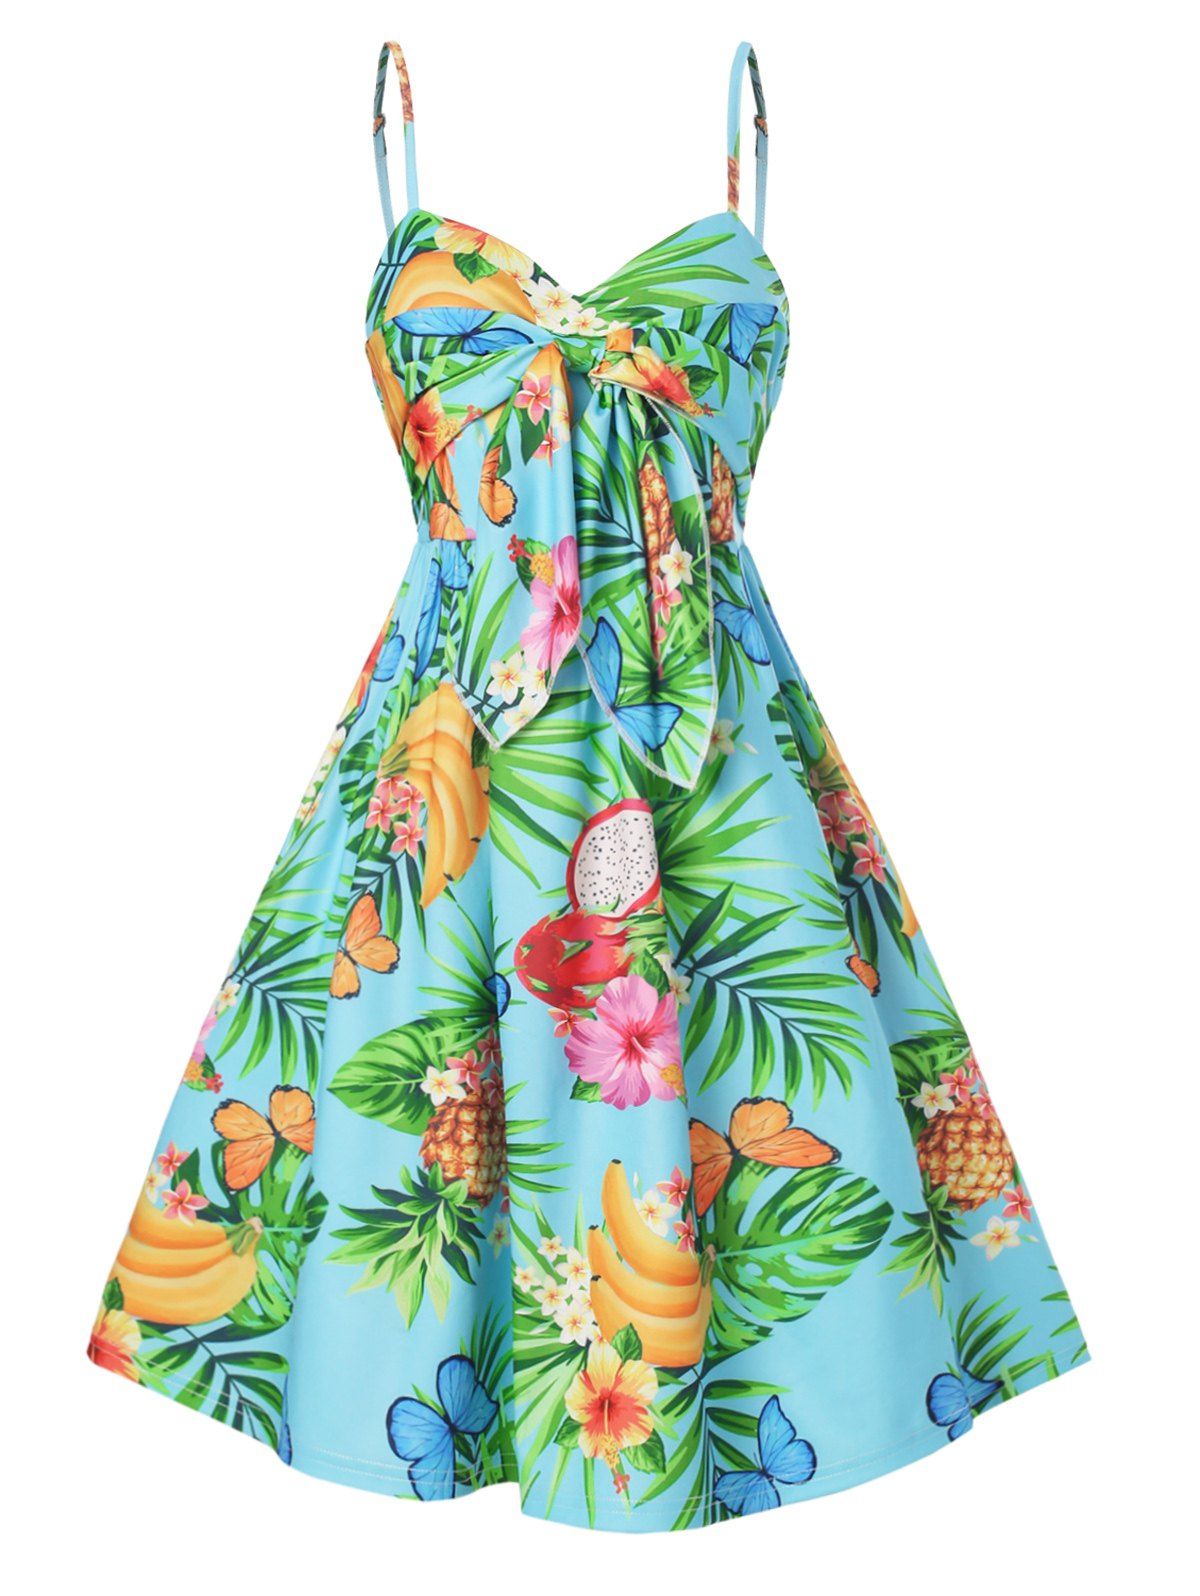 Dresslily Tropical Print Beach Sundress Floral Fruit Knotted Front Summer Cami Empire Waist Dress